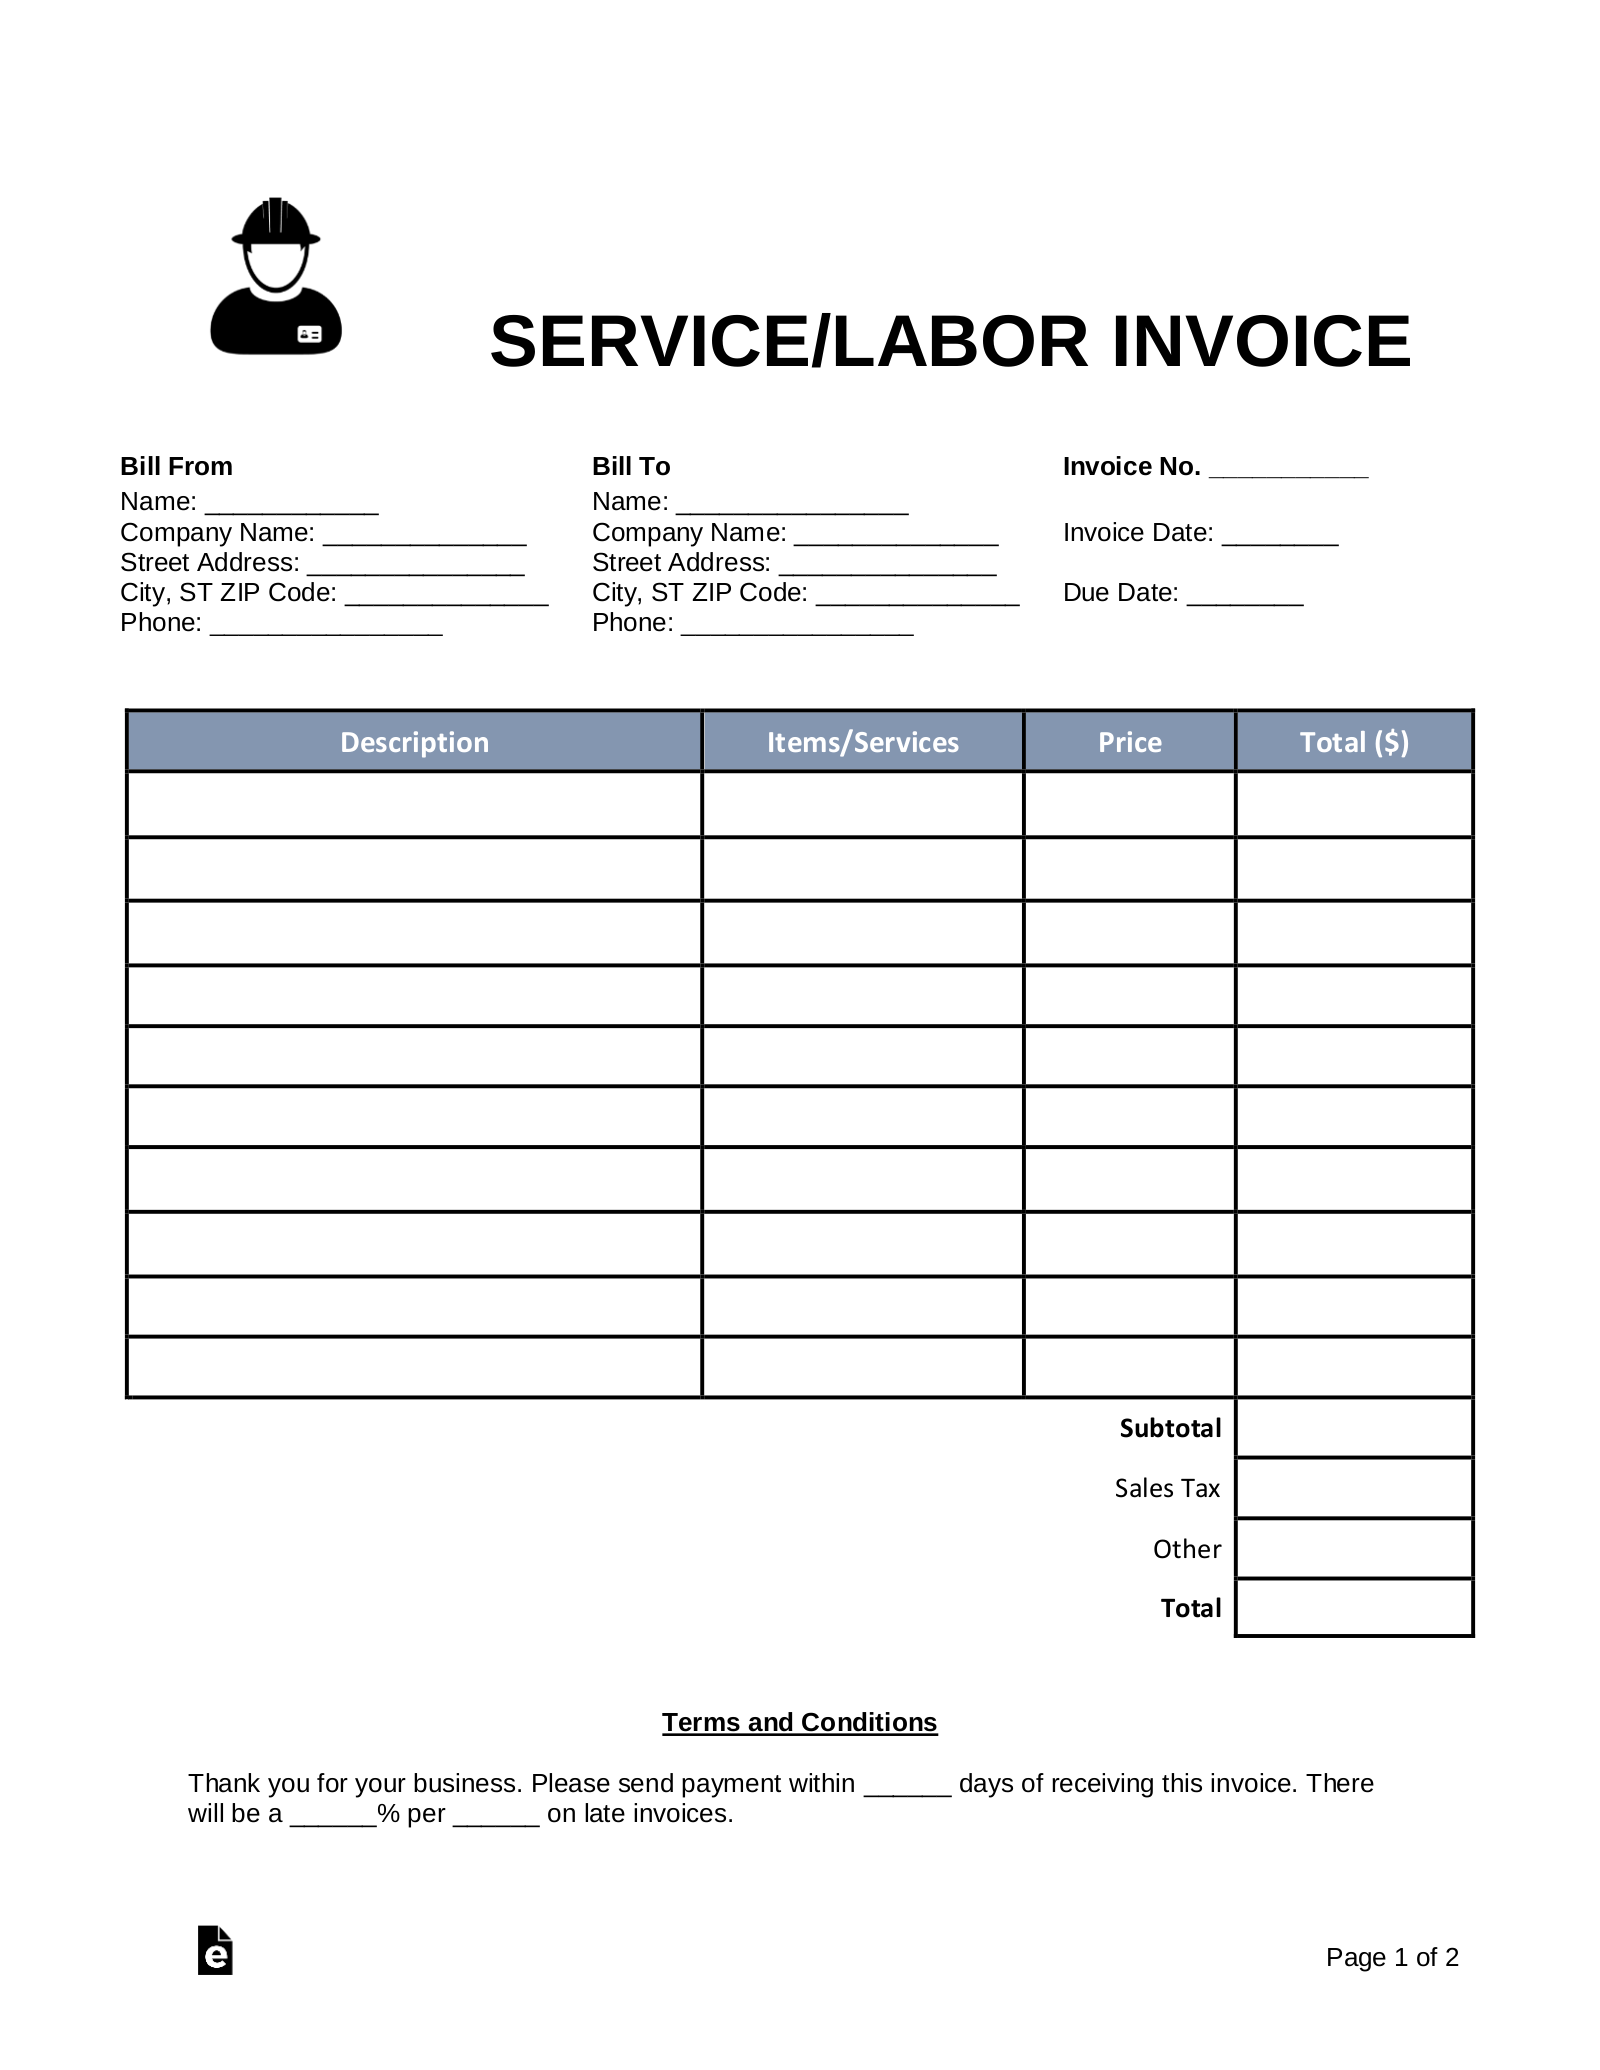 Free Service Labor Invoice Template Word Pdf Eforms